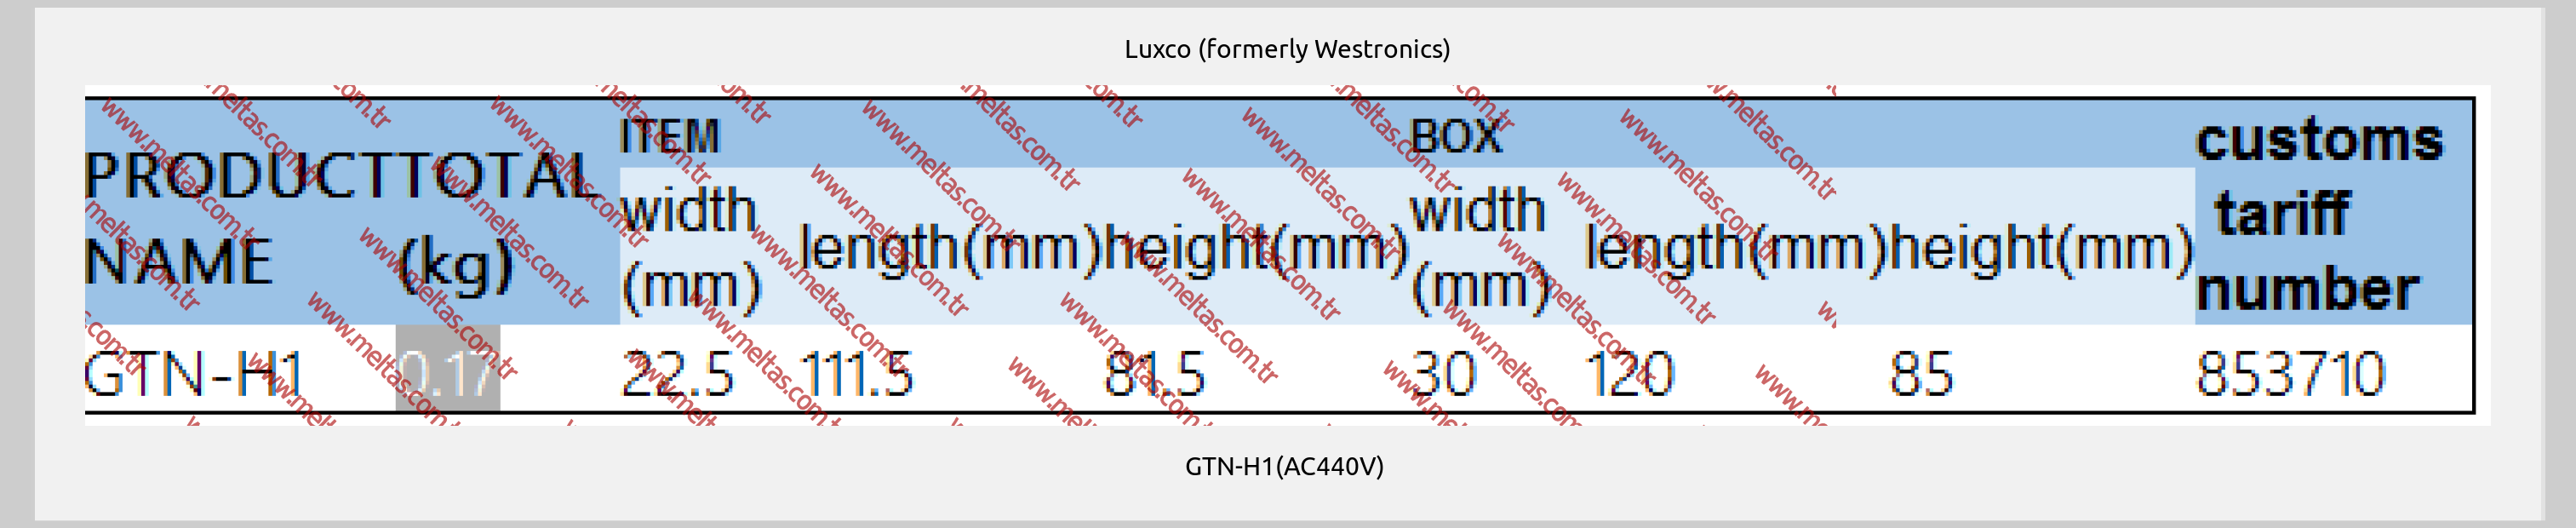 Luxco (formerly Westronics) - GTN-H1(AC440V) 